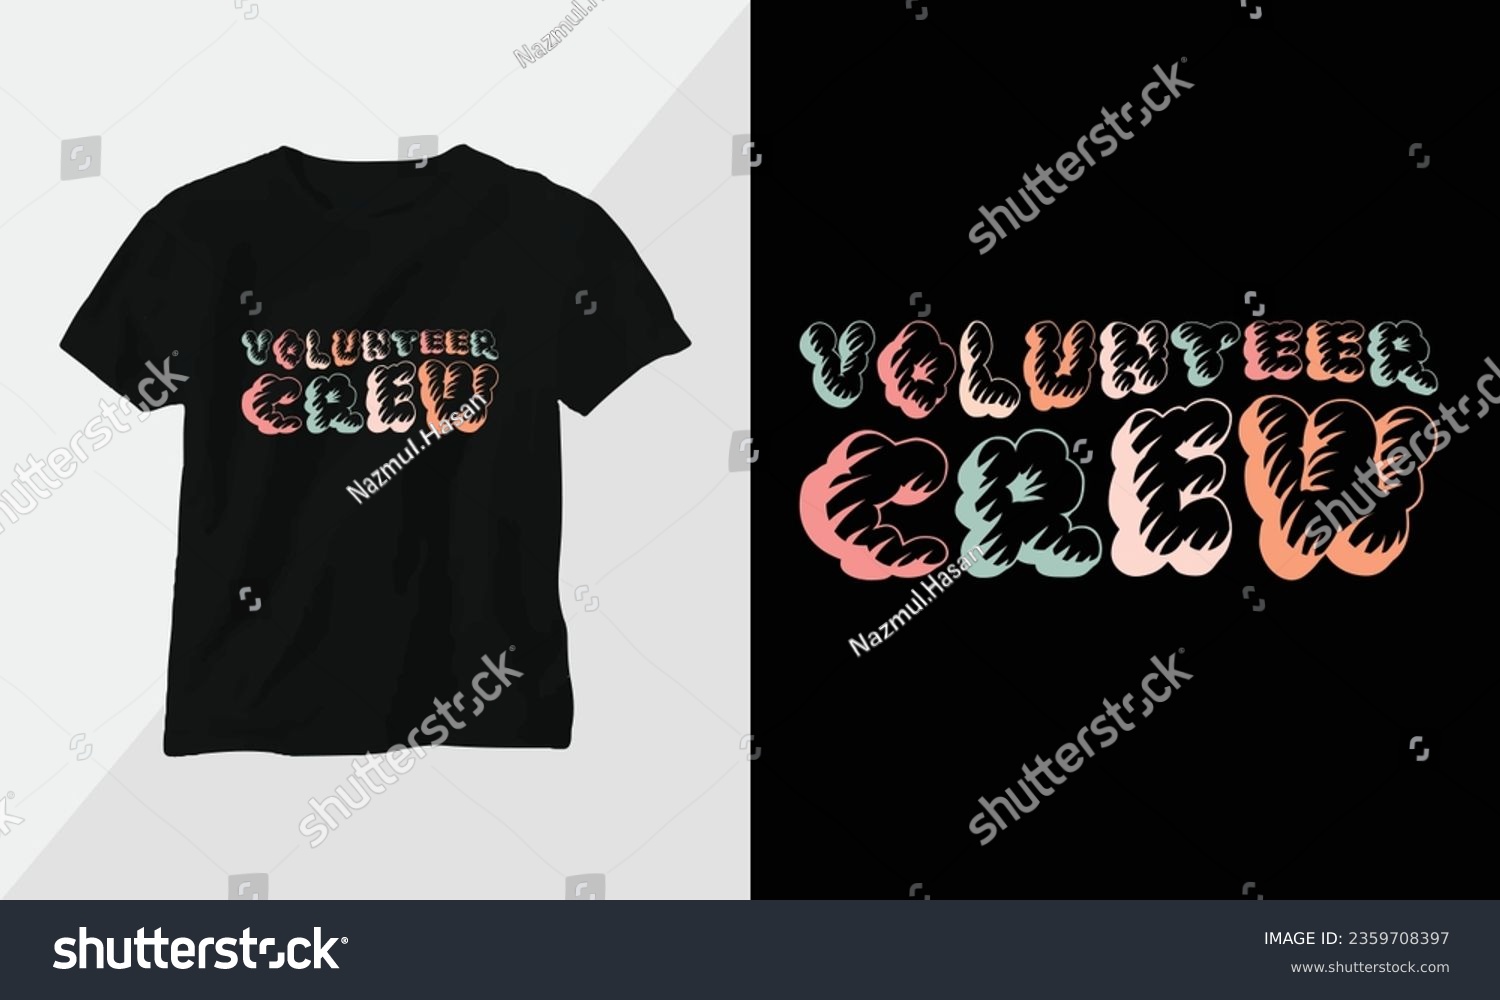 SVG of volunteer crew - Retro Groovy Inspirational T-shirt Design with retro style svg